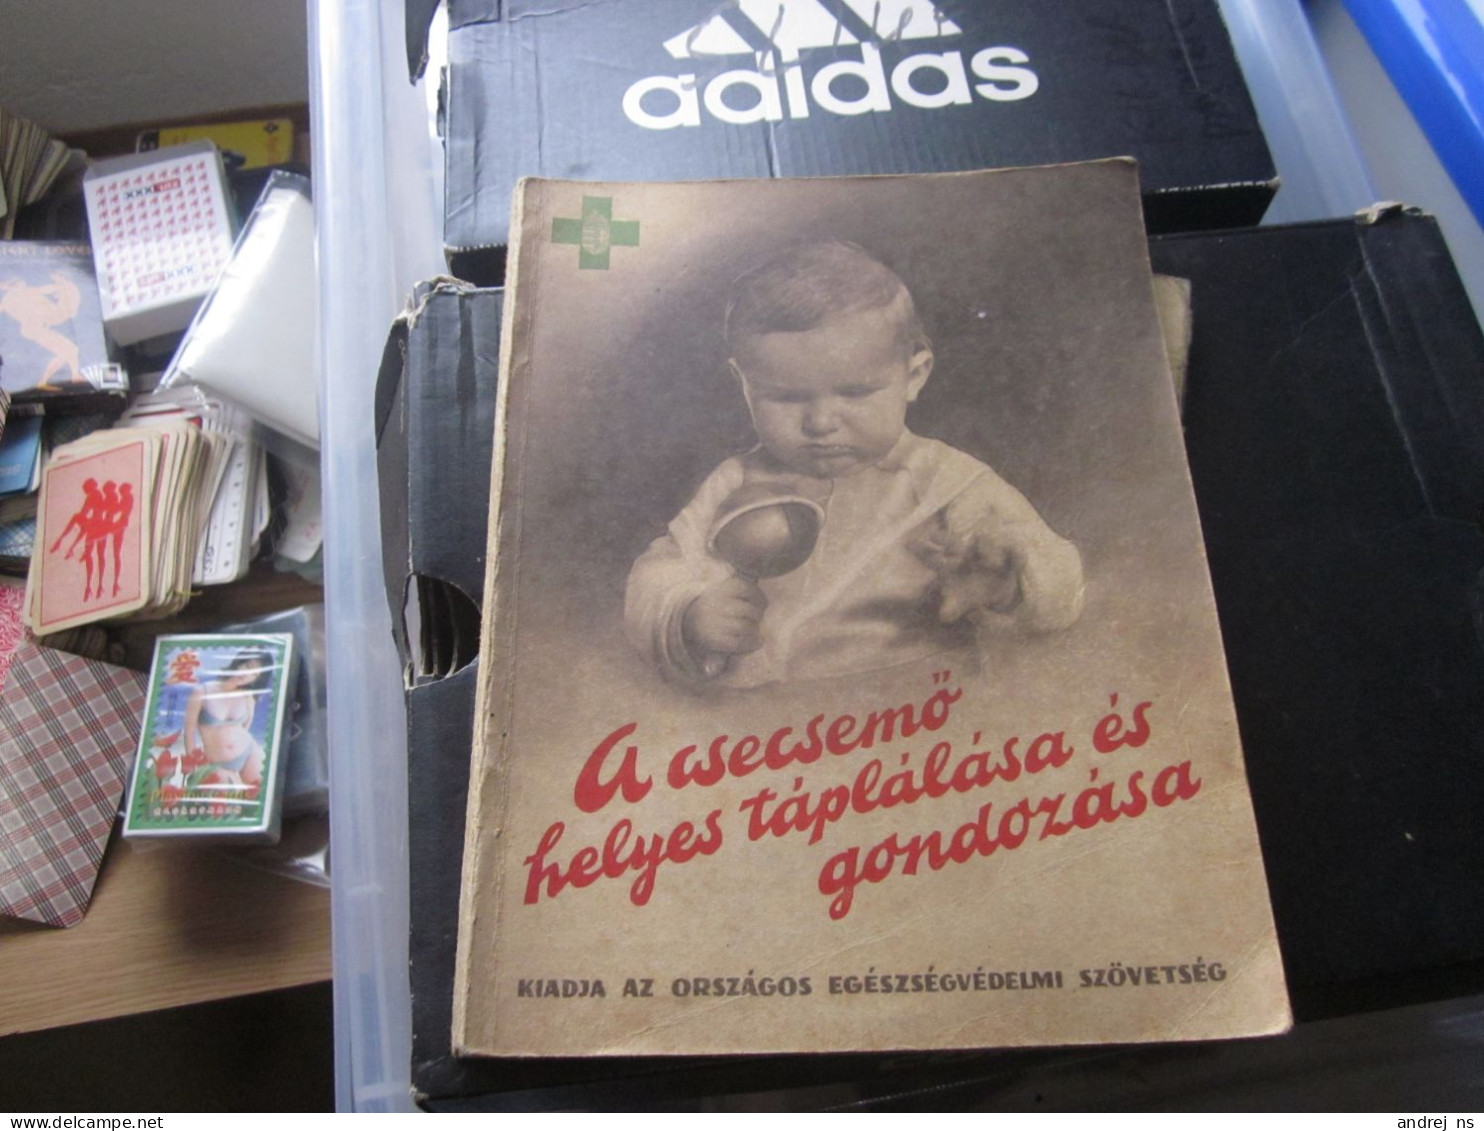 A Csecsemo Helyes Táplálása Es Gondozasa Proper Feeding And Care Of The Baby Budapest 1943 92 Pages - Alte Bücher